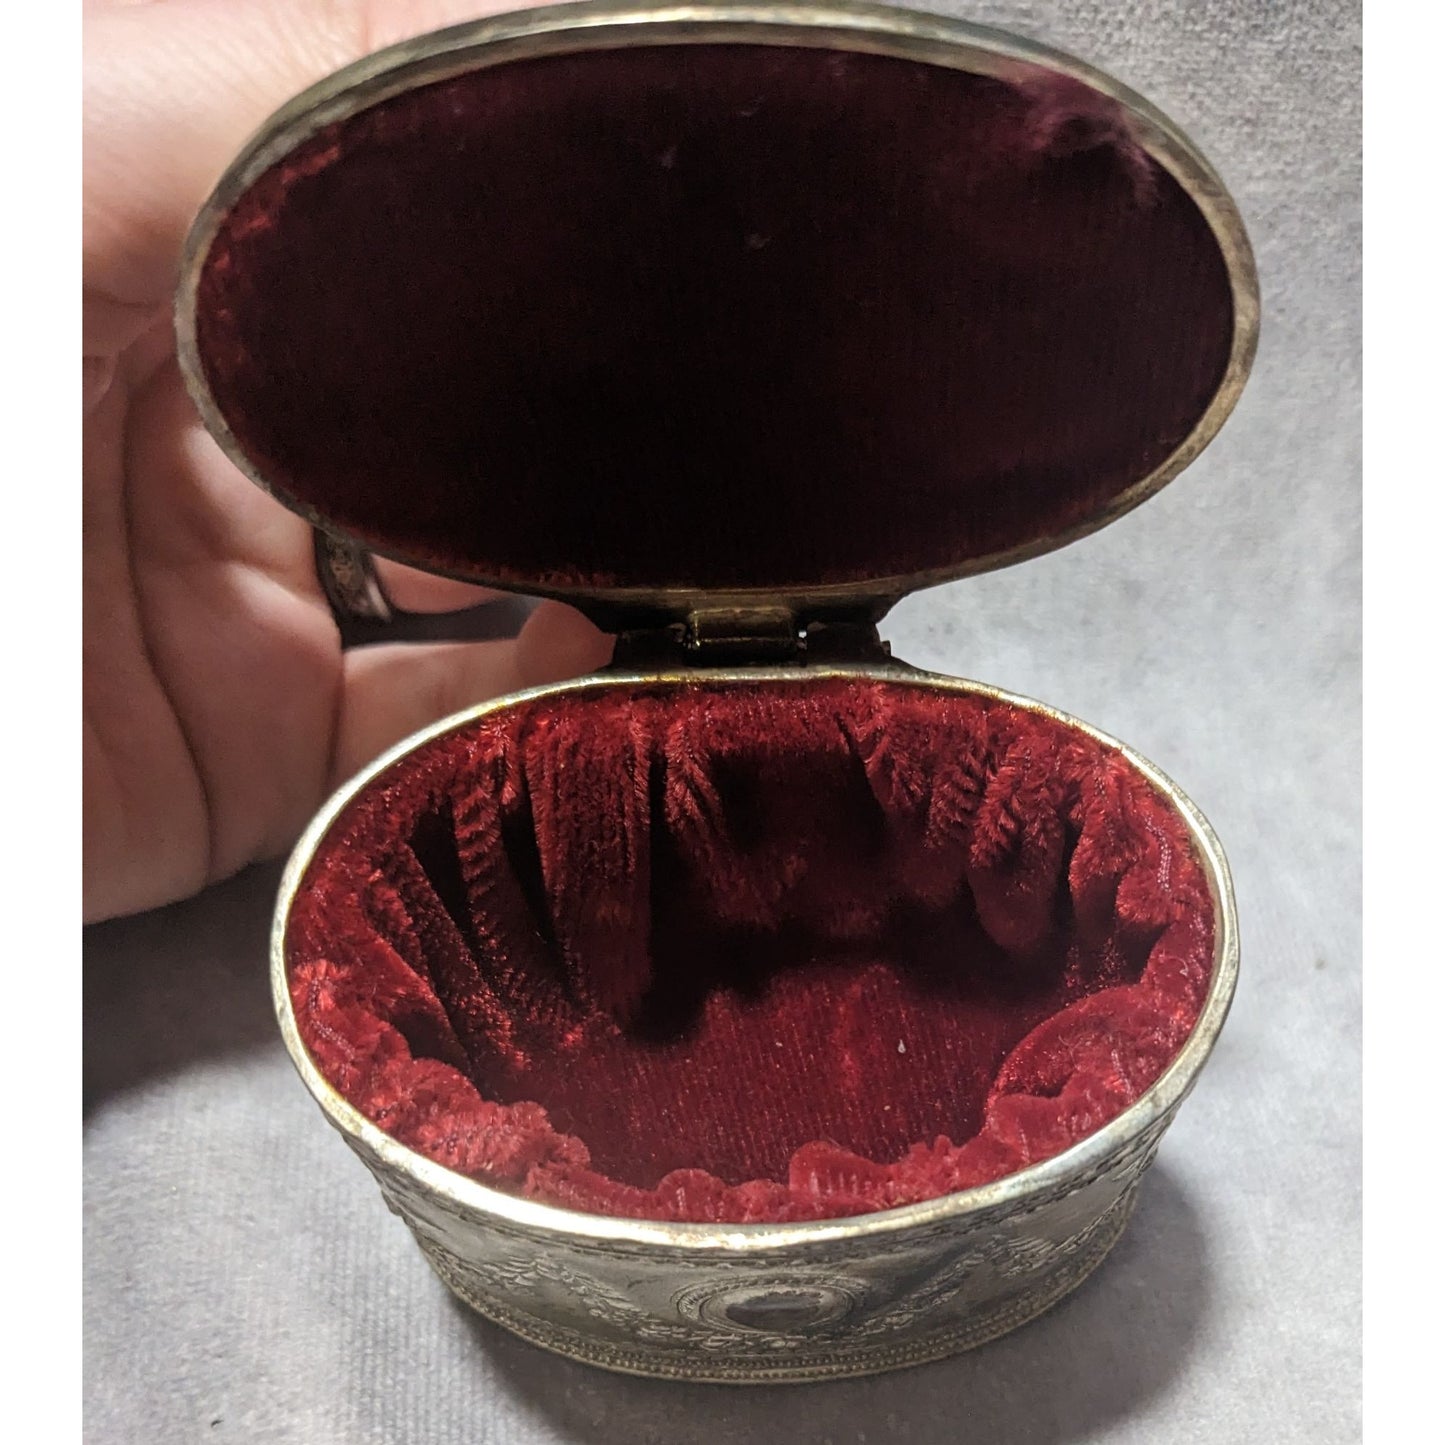 Vintage Silver Lidded Jewelry Box